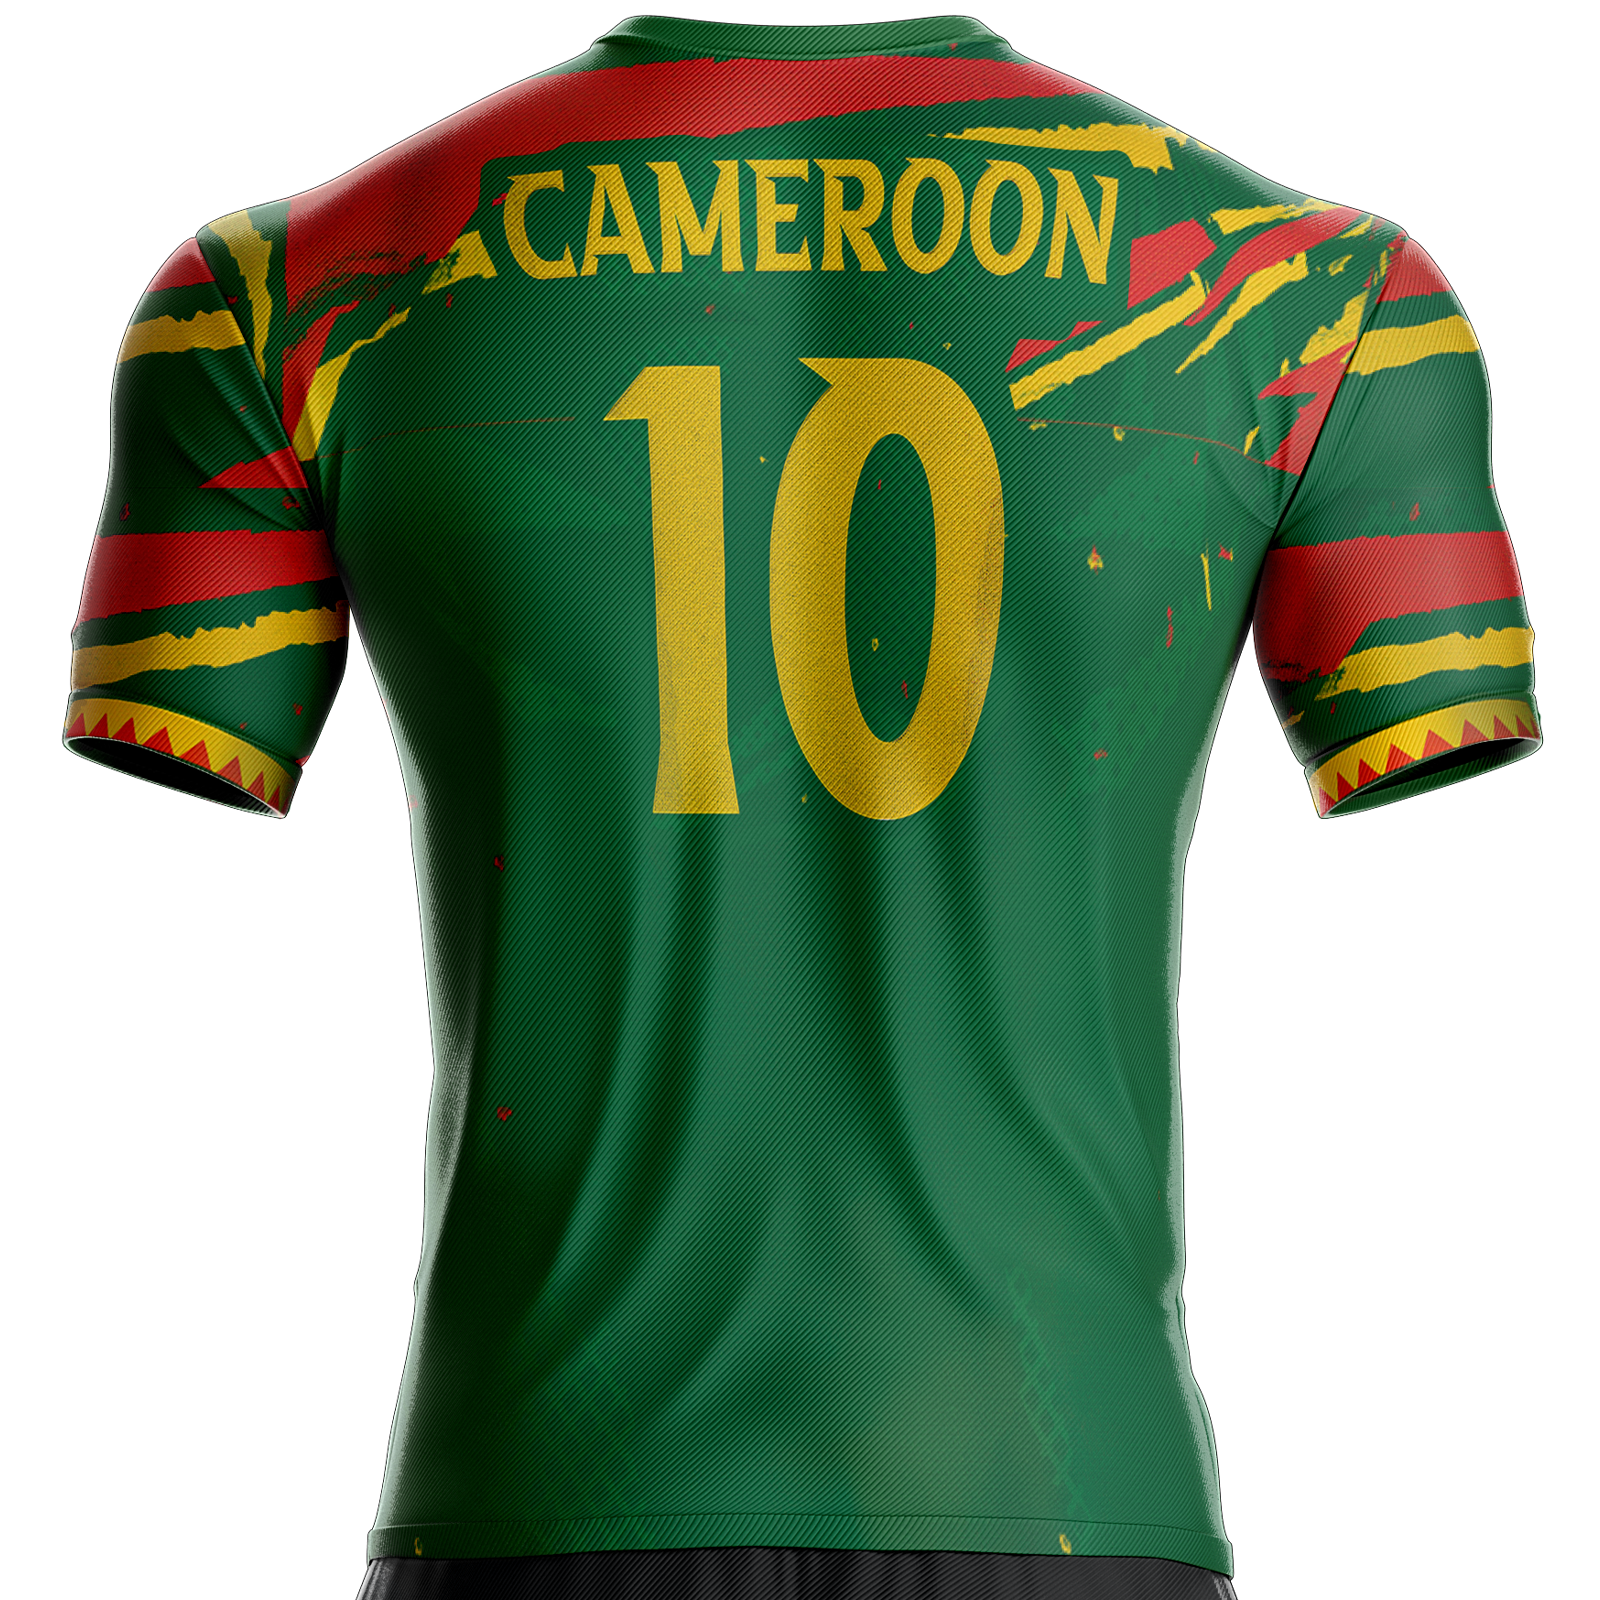 https://unitif.com/246-thickbox_default/maillot-cameroun-football-cr-4-pour-supporter.jpg